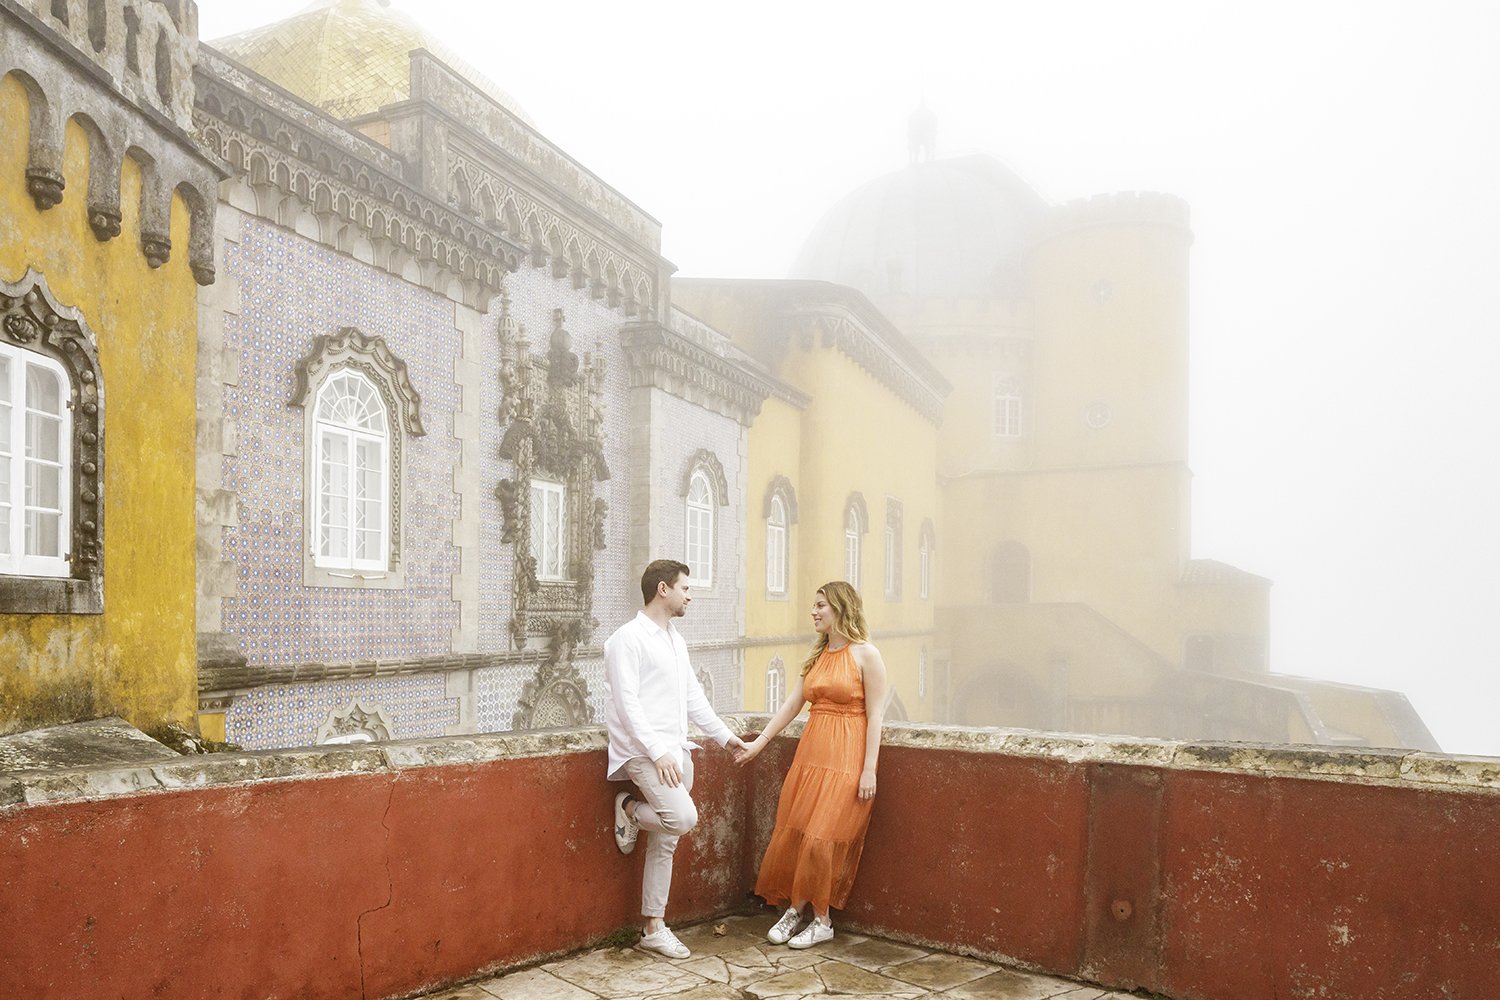 pena-palace-sintra-surprise-wedding-proposal-photographer-ana-lucia-terra-fotografia-17.jpg